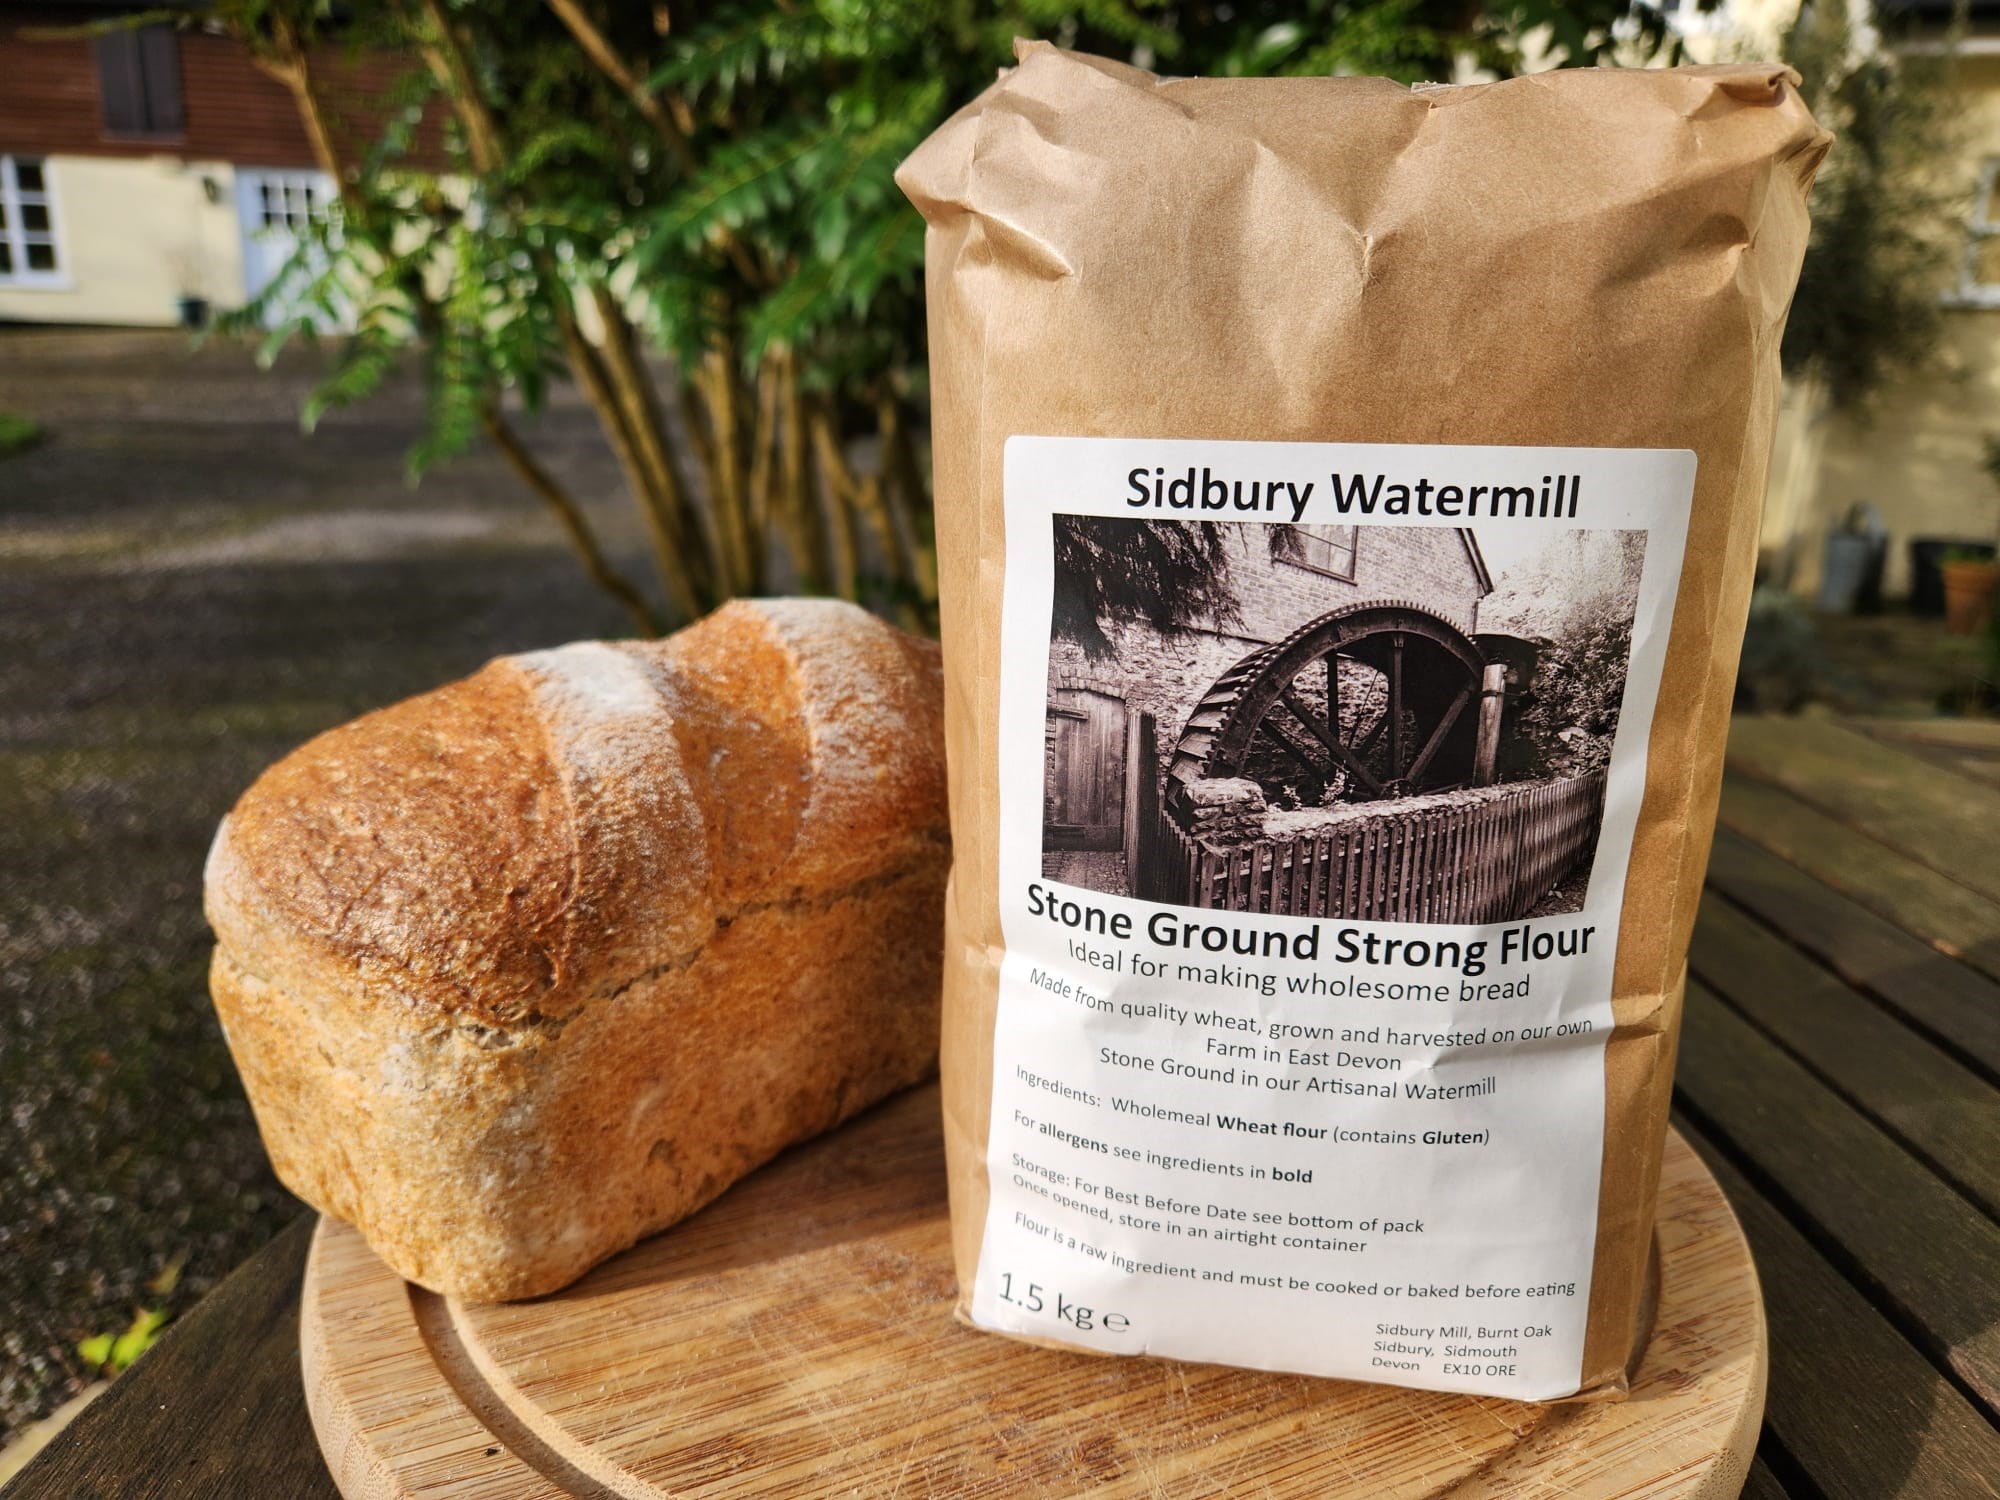 Sidbury Mill Stone Ground Strong Flour